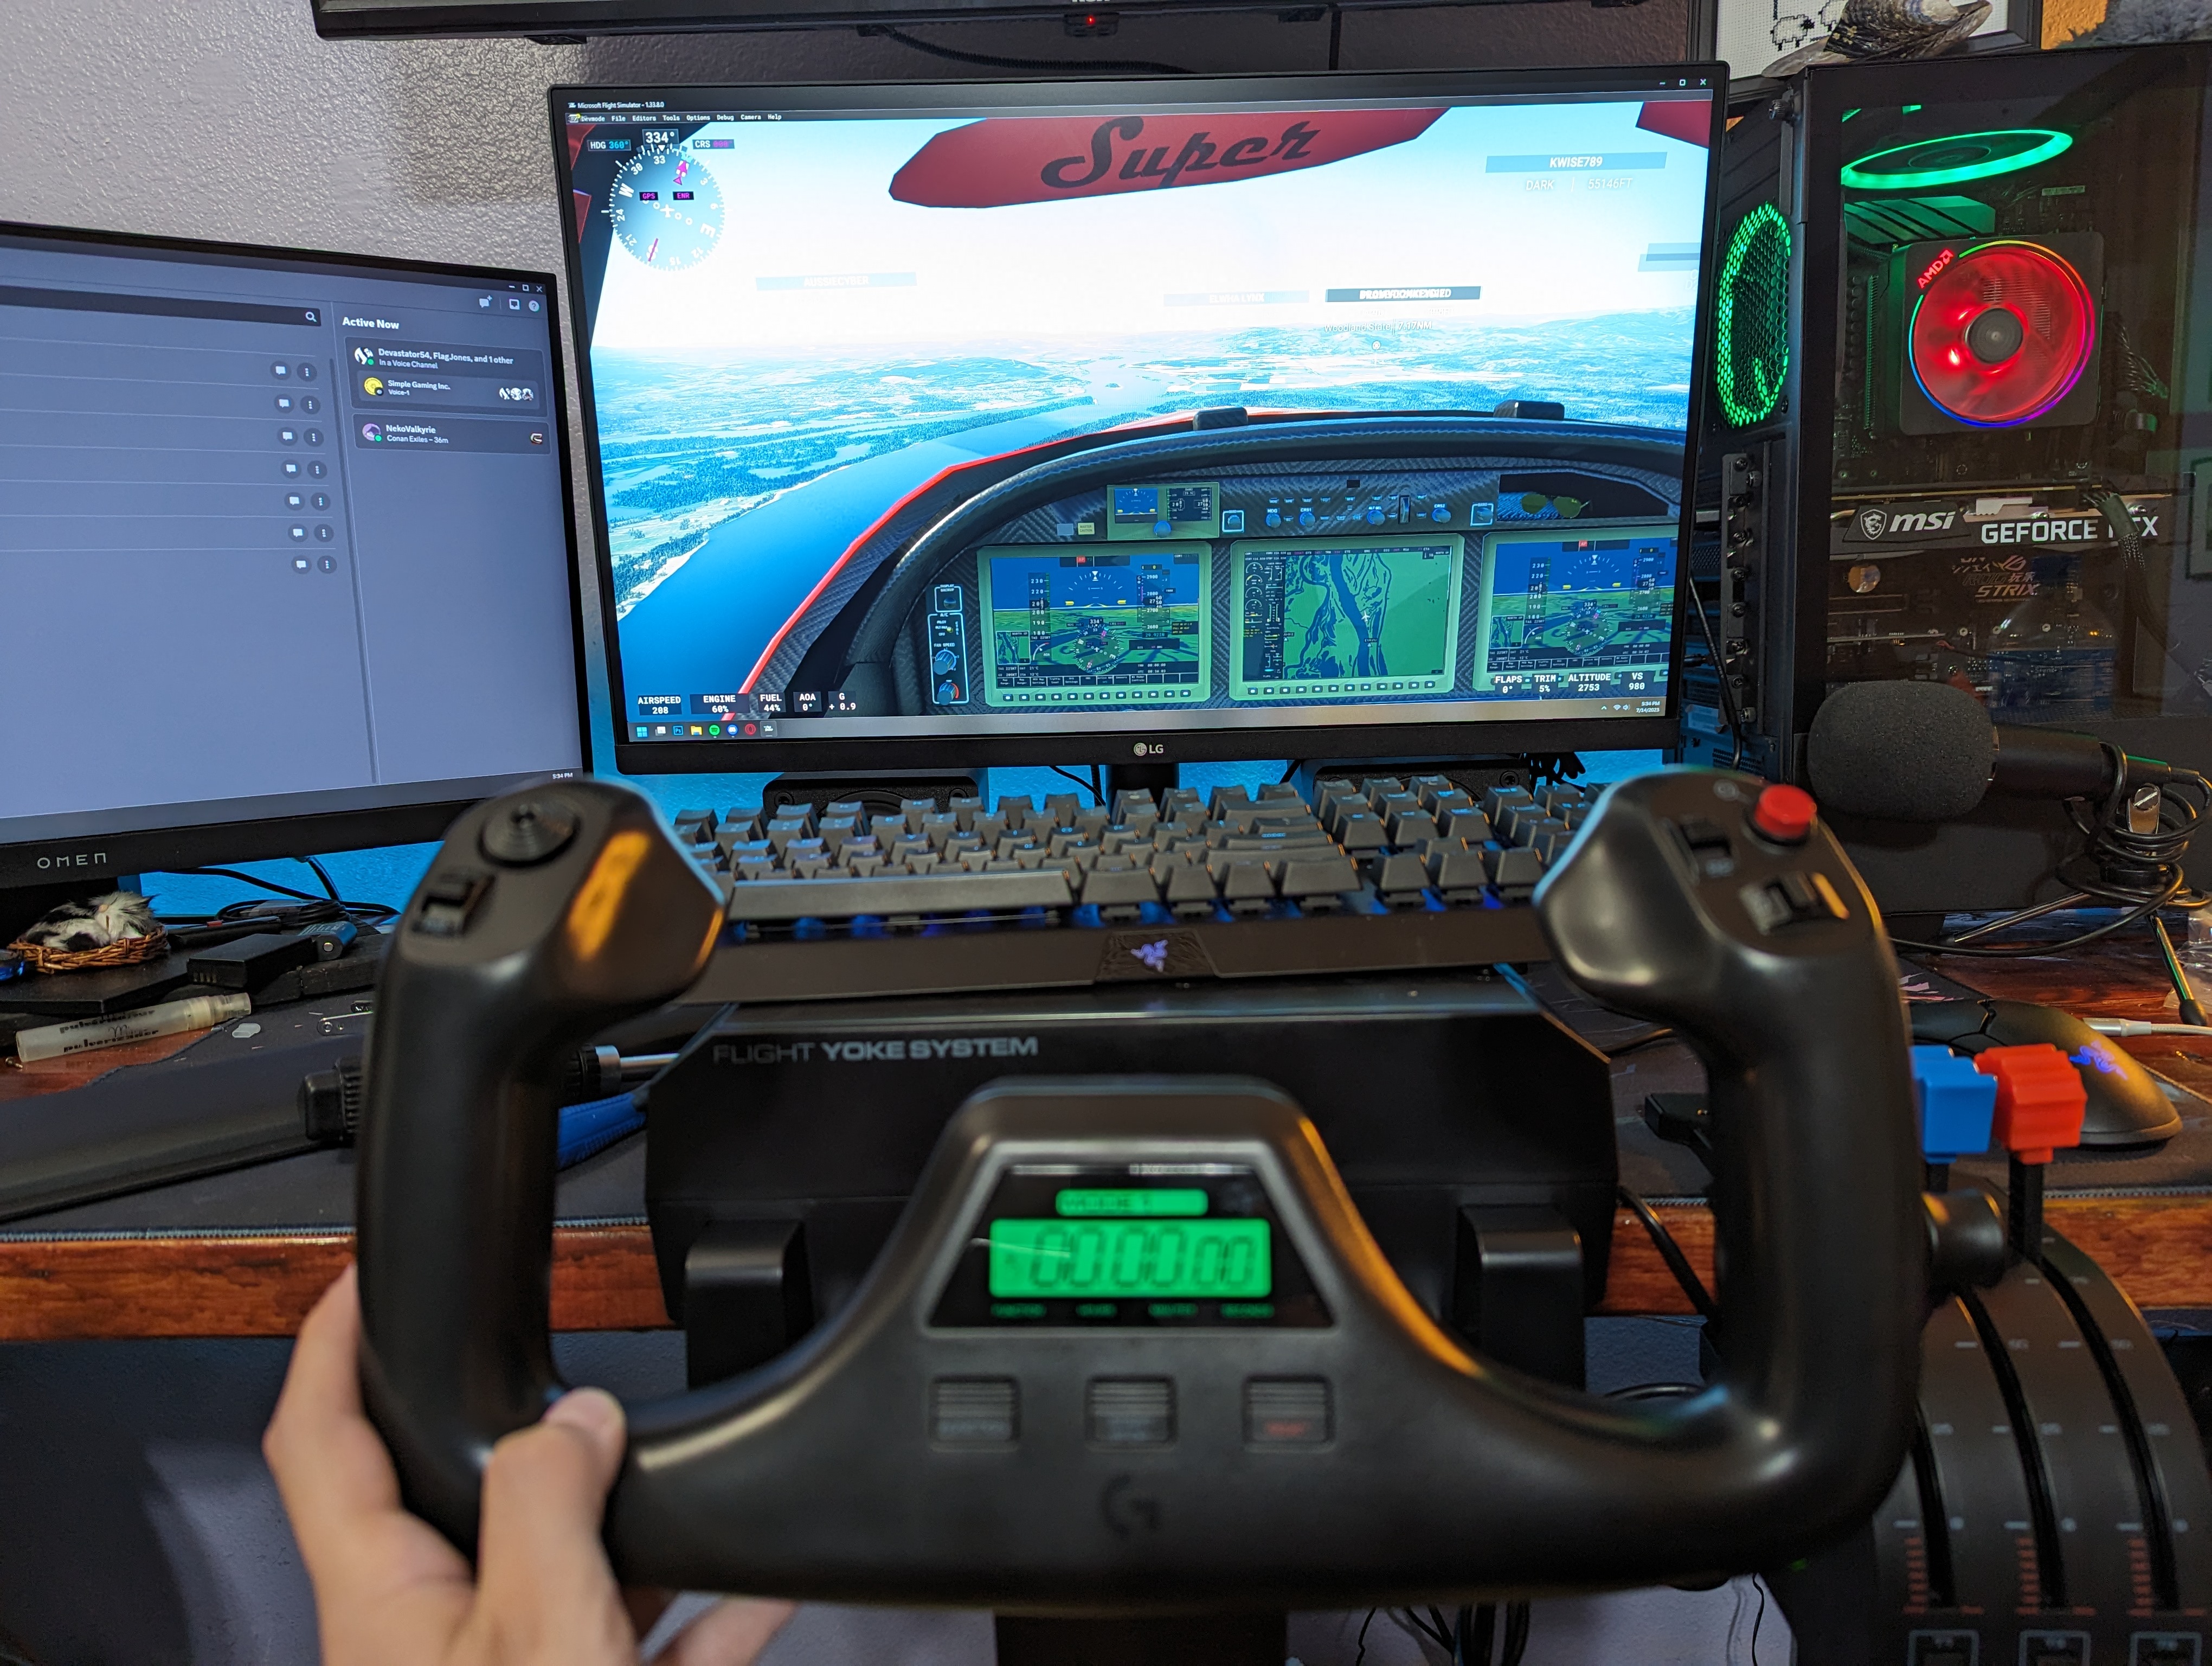 Logitech Yoke Flight Simulator